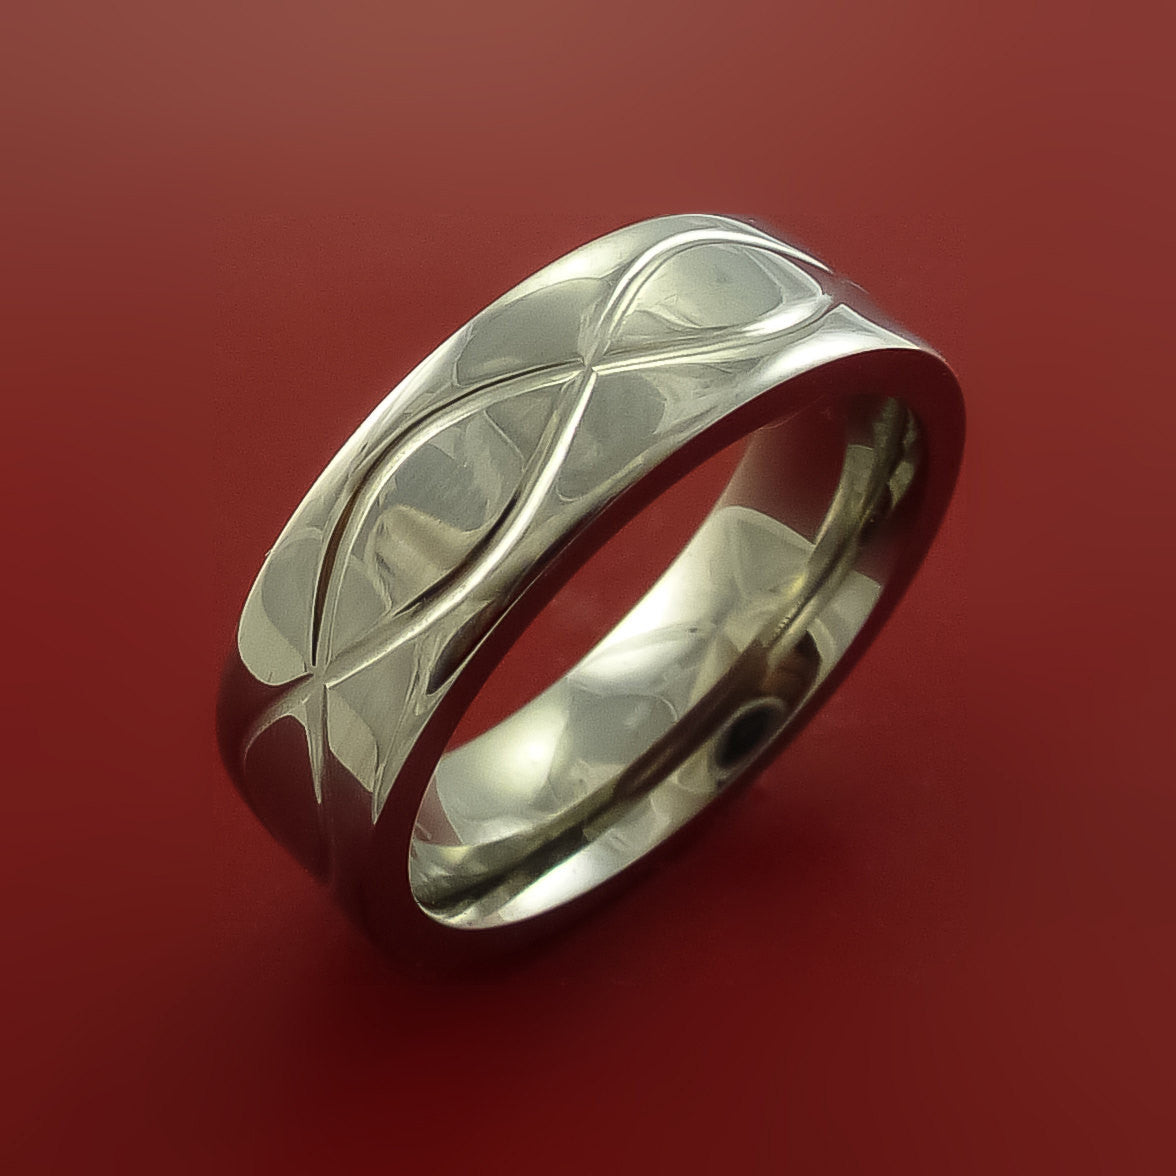 Buy Zircon Sterling Silver Ring for Men Online - Unniyarcha